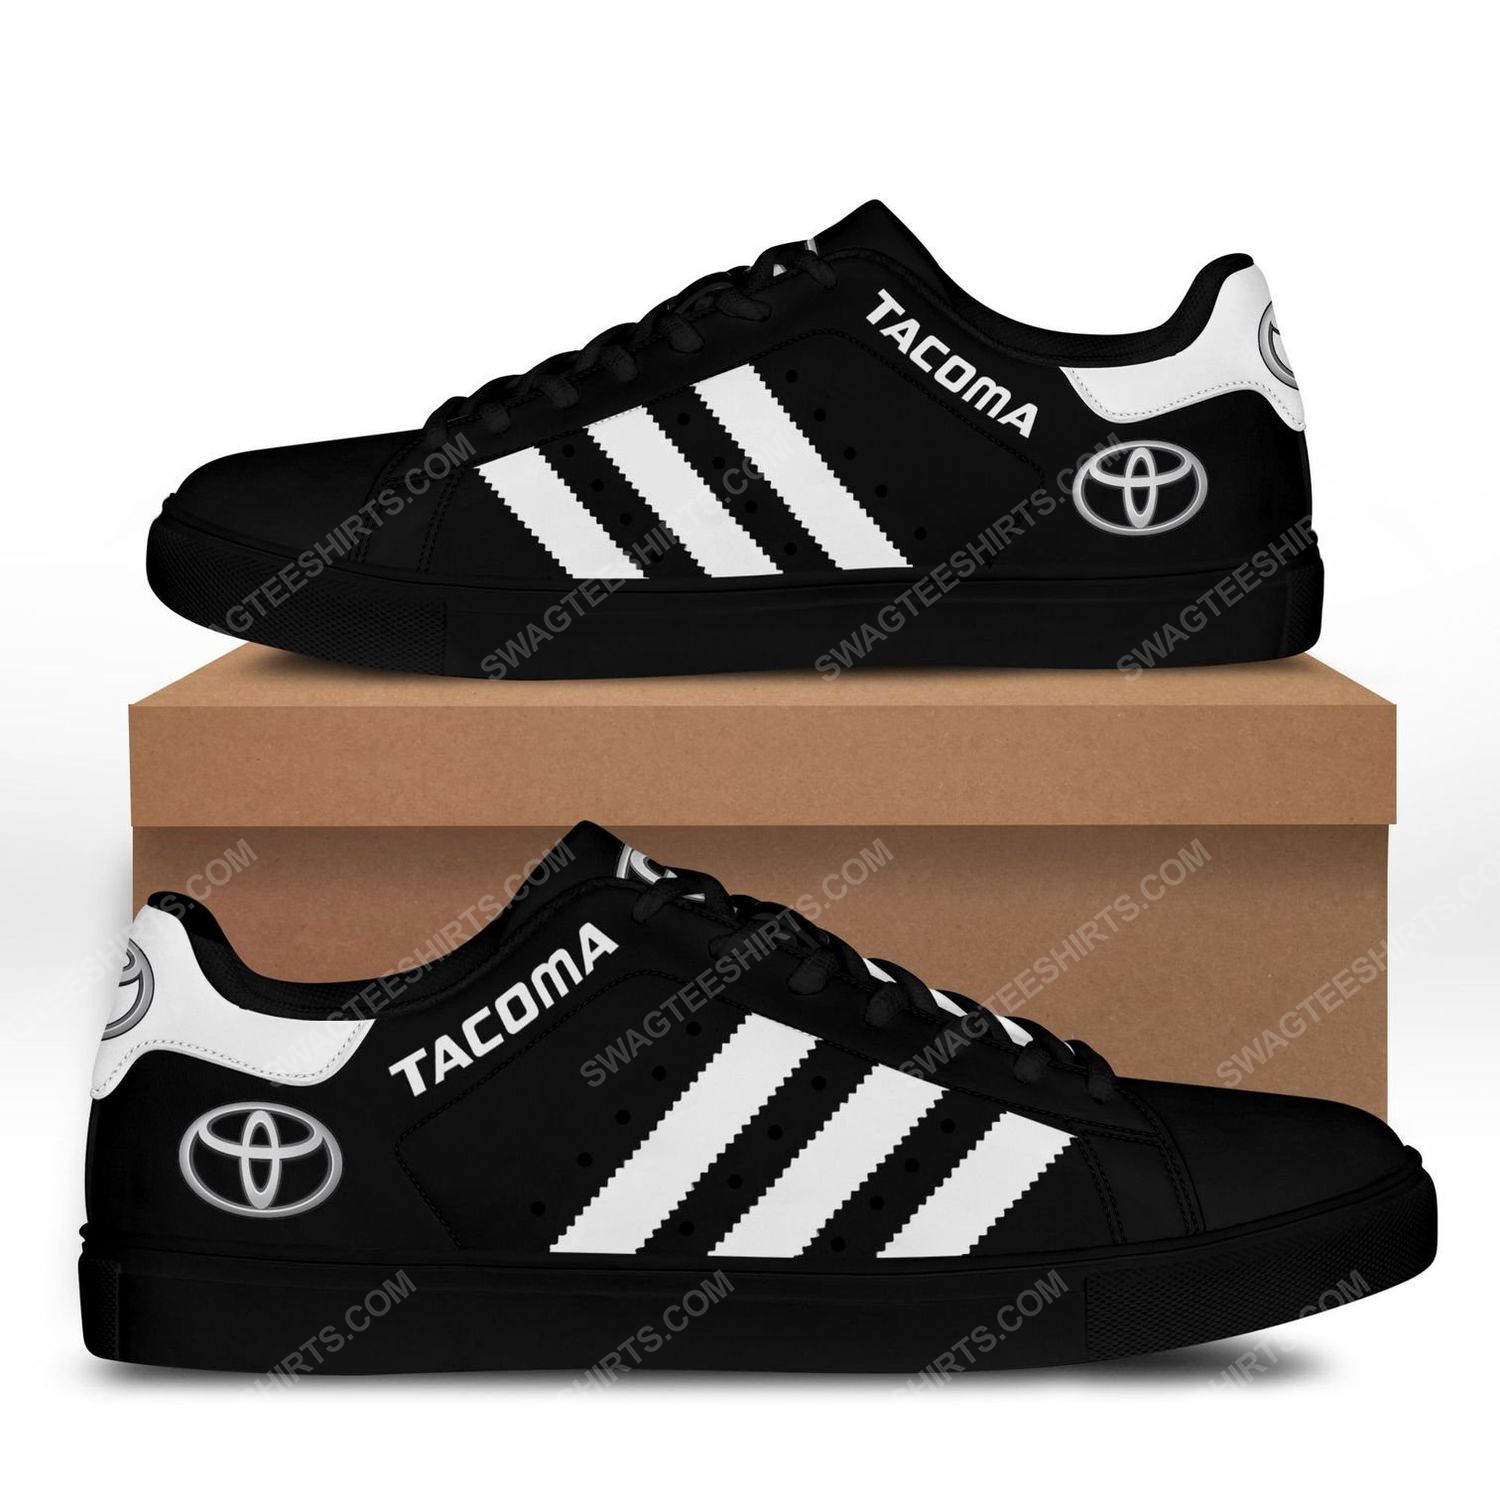 Toyota tacoma version black stan smith shoes - black 1